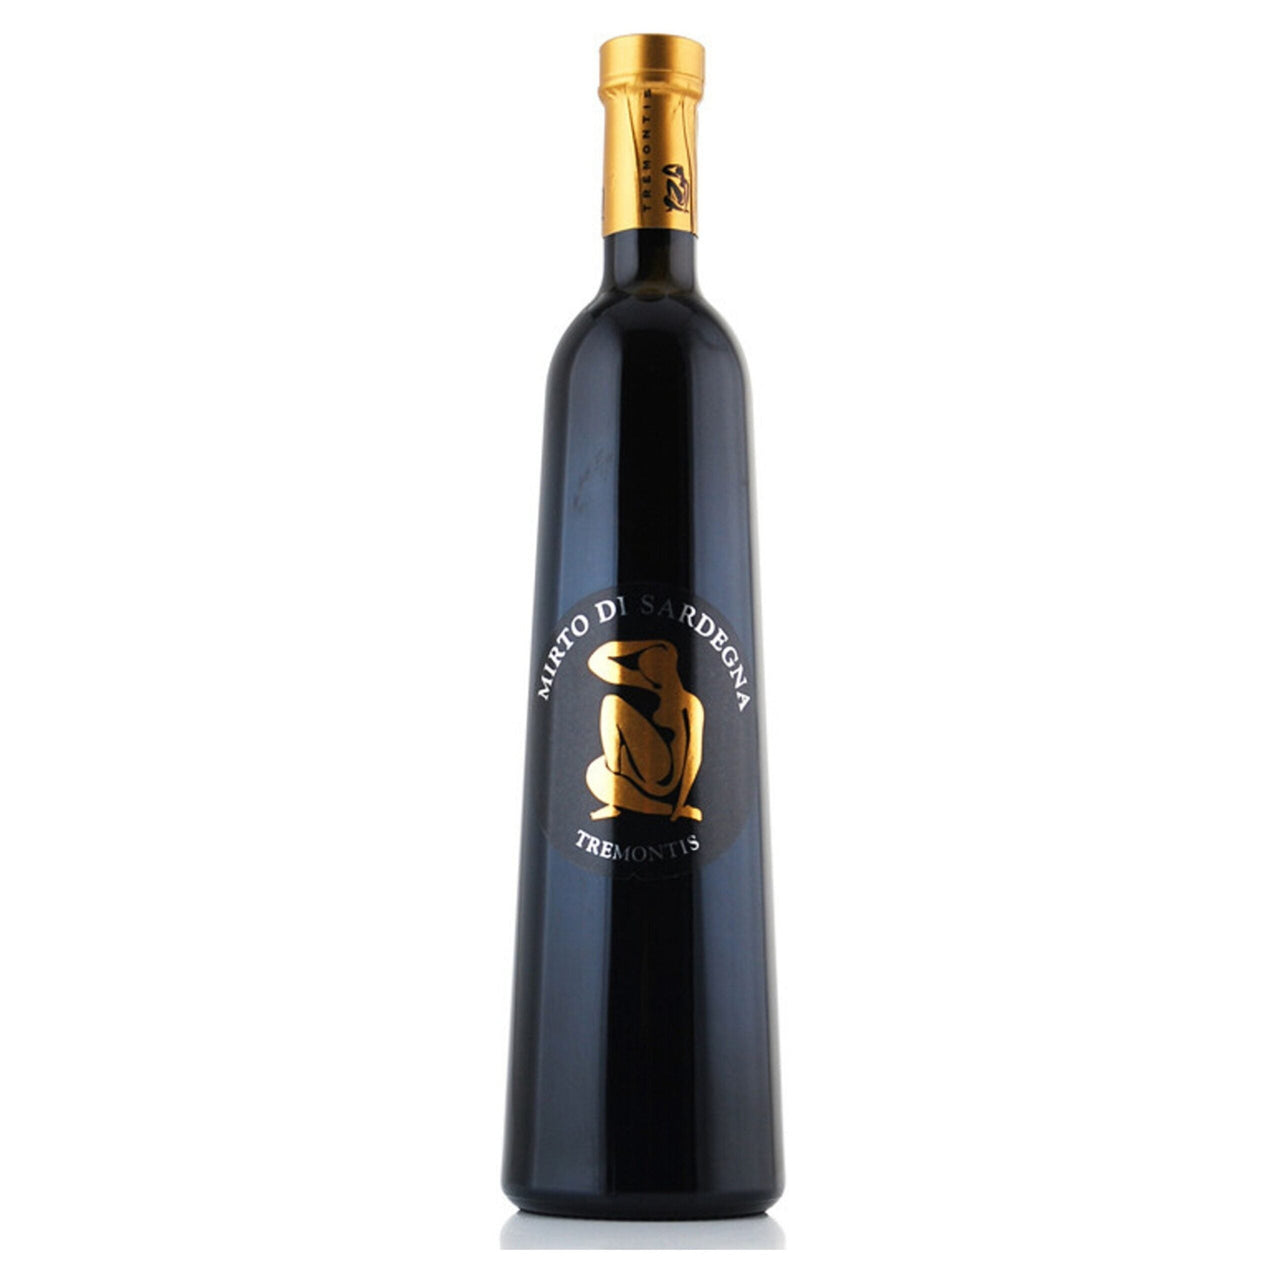 ARGIOLAS- Mirto Rosso - Aperitvo/Digestivo Italy - Liquor Wine Cave